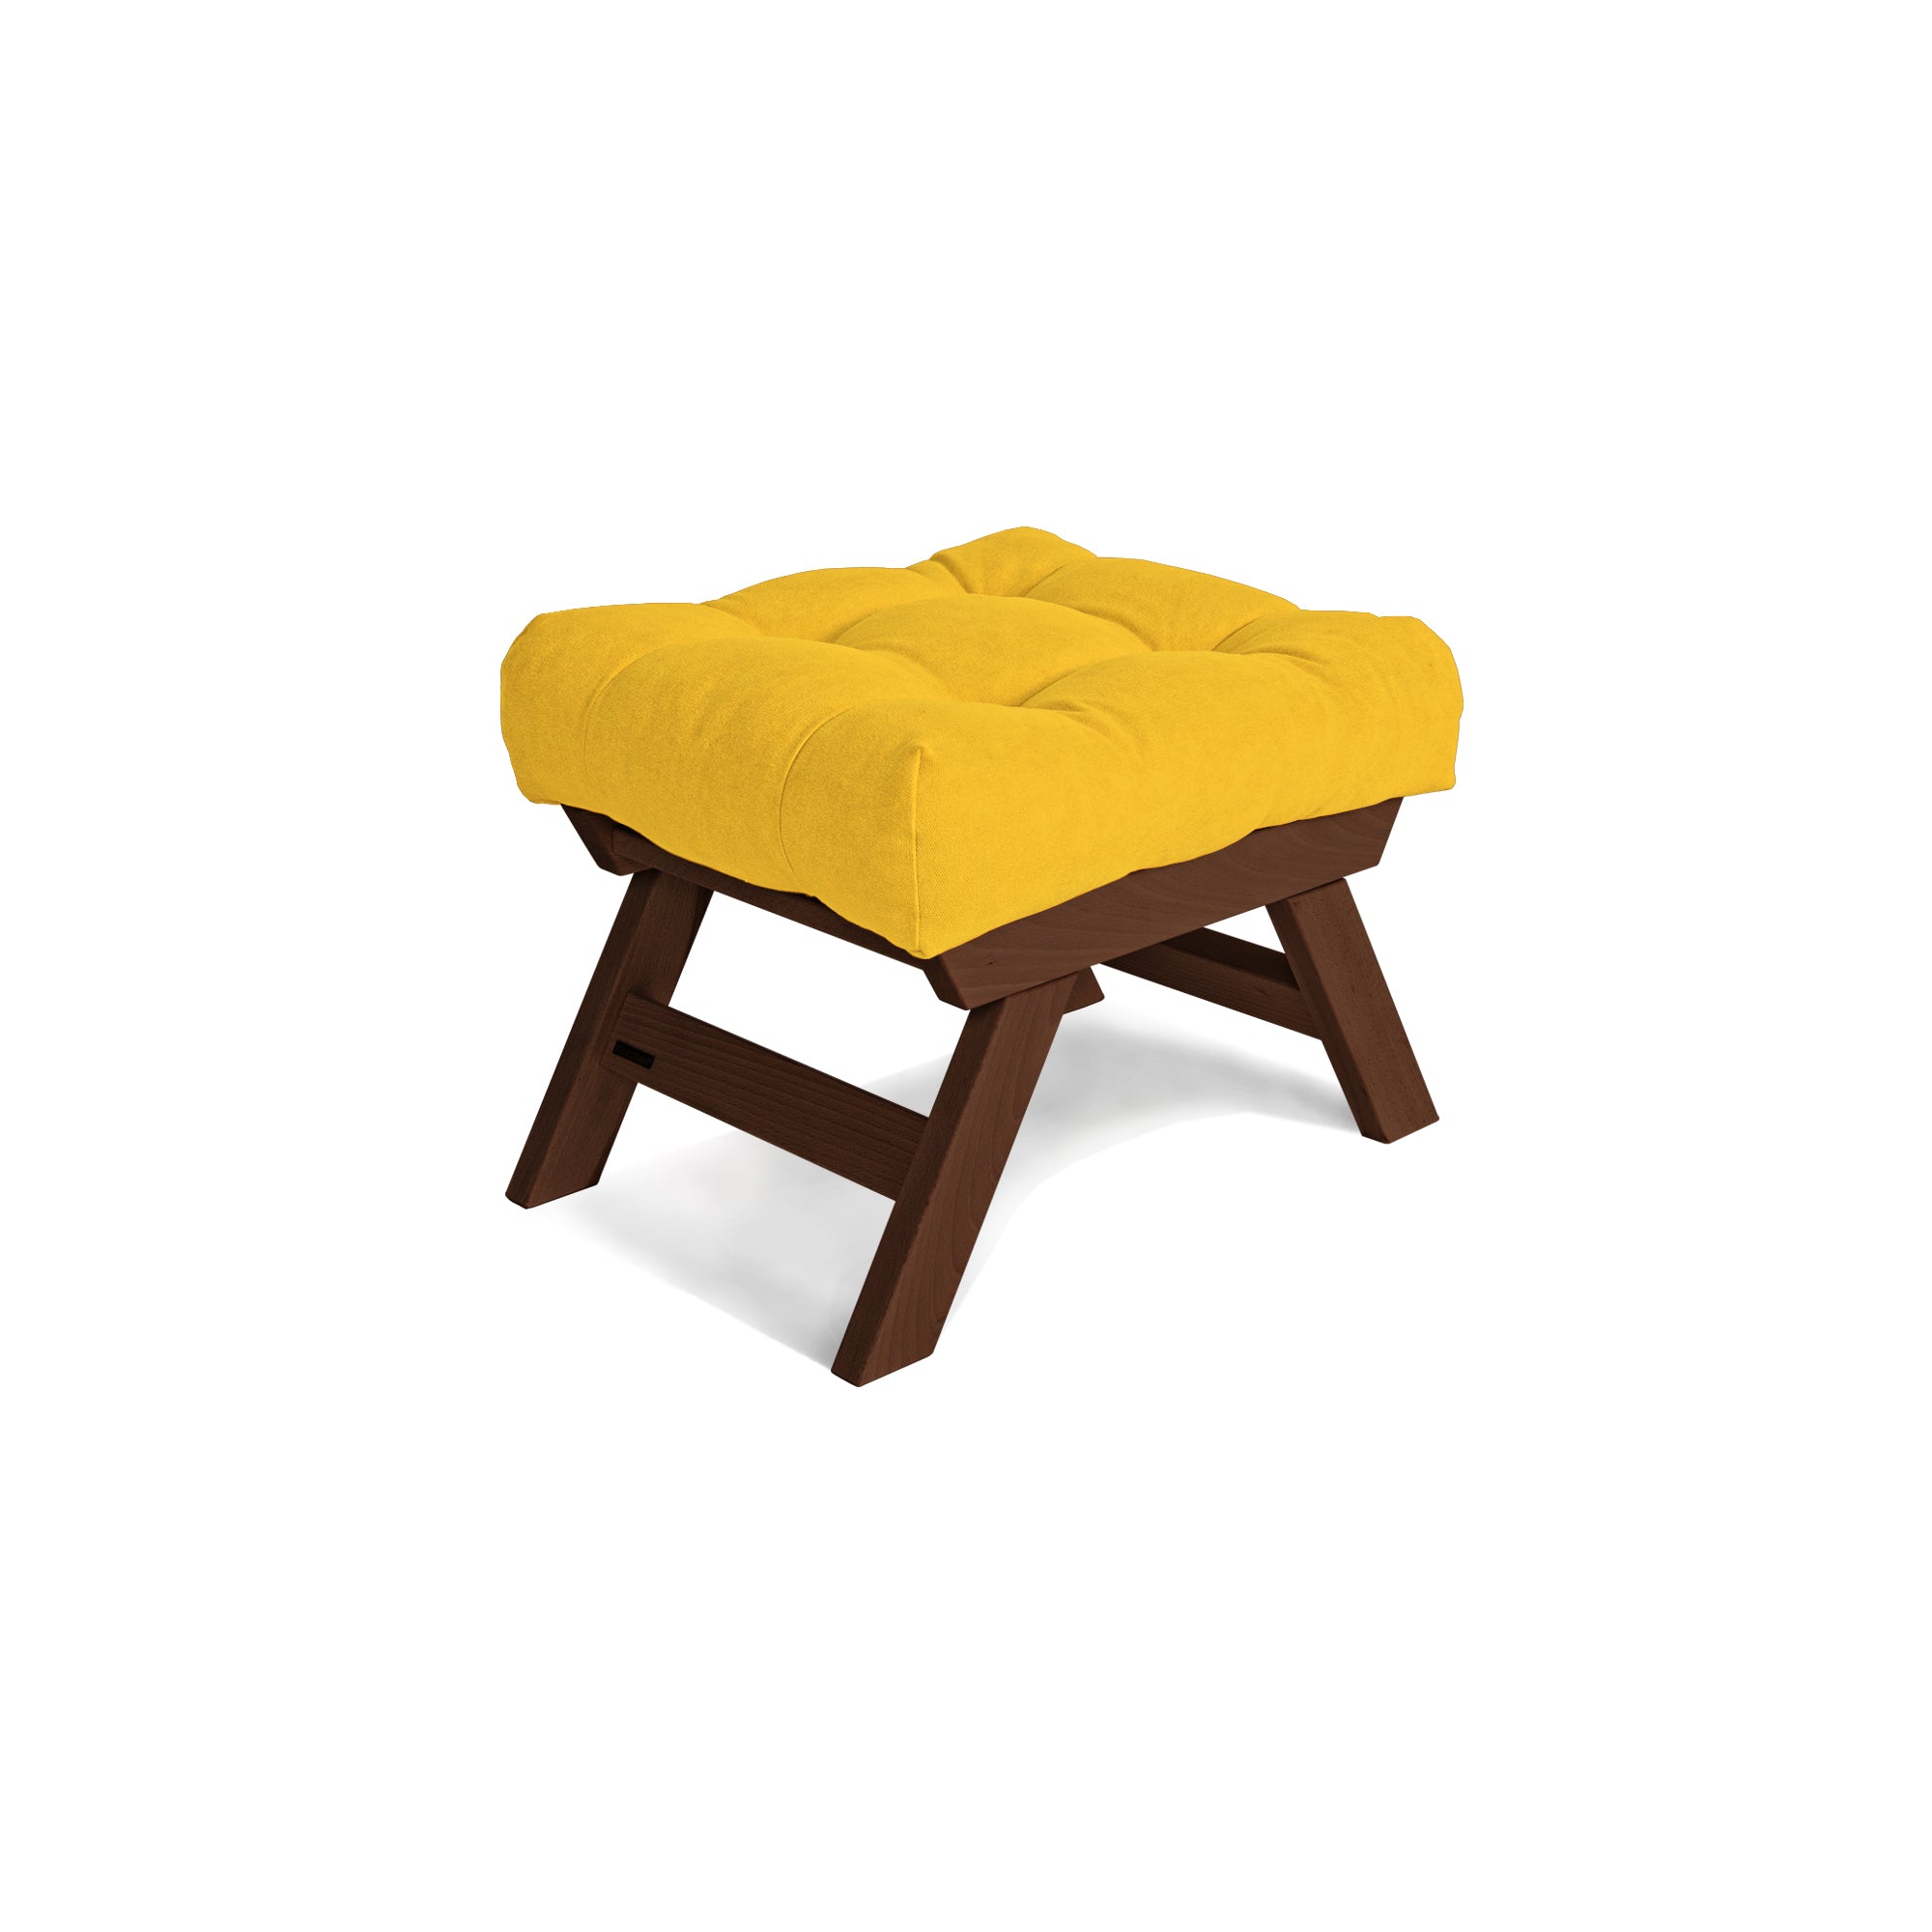 ALLEGRO Pouffe, Walnut Wood upholstery colour yellow